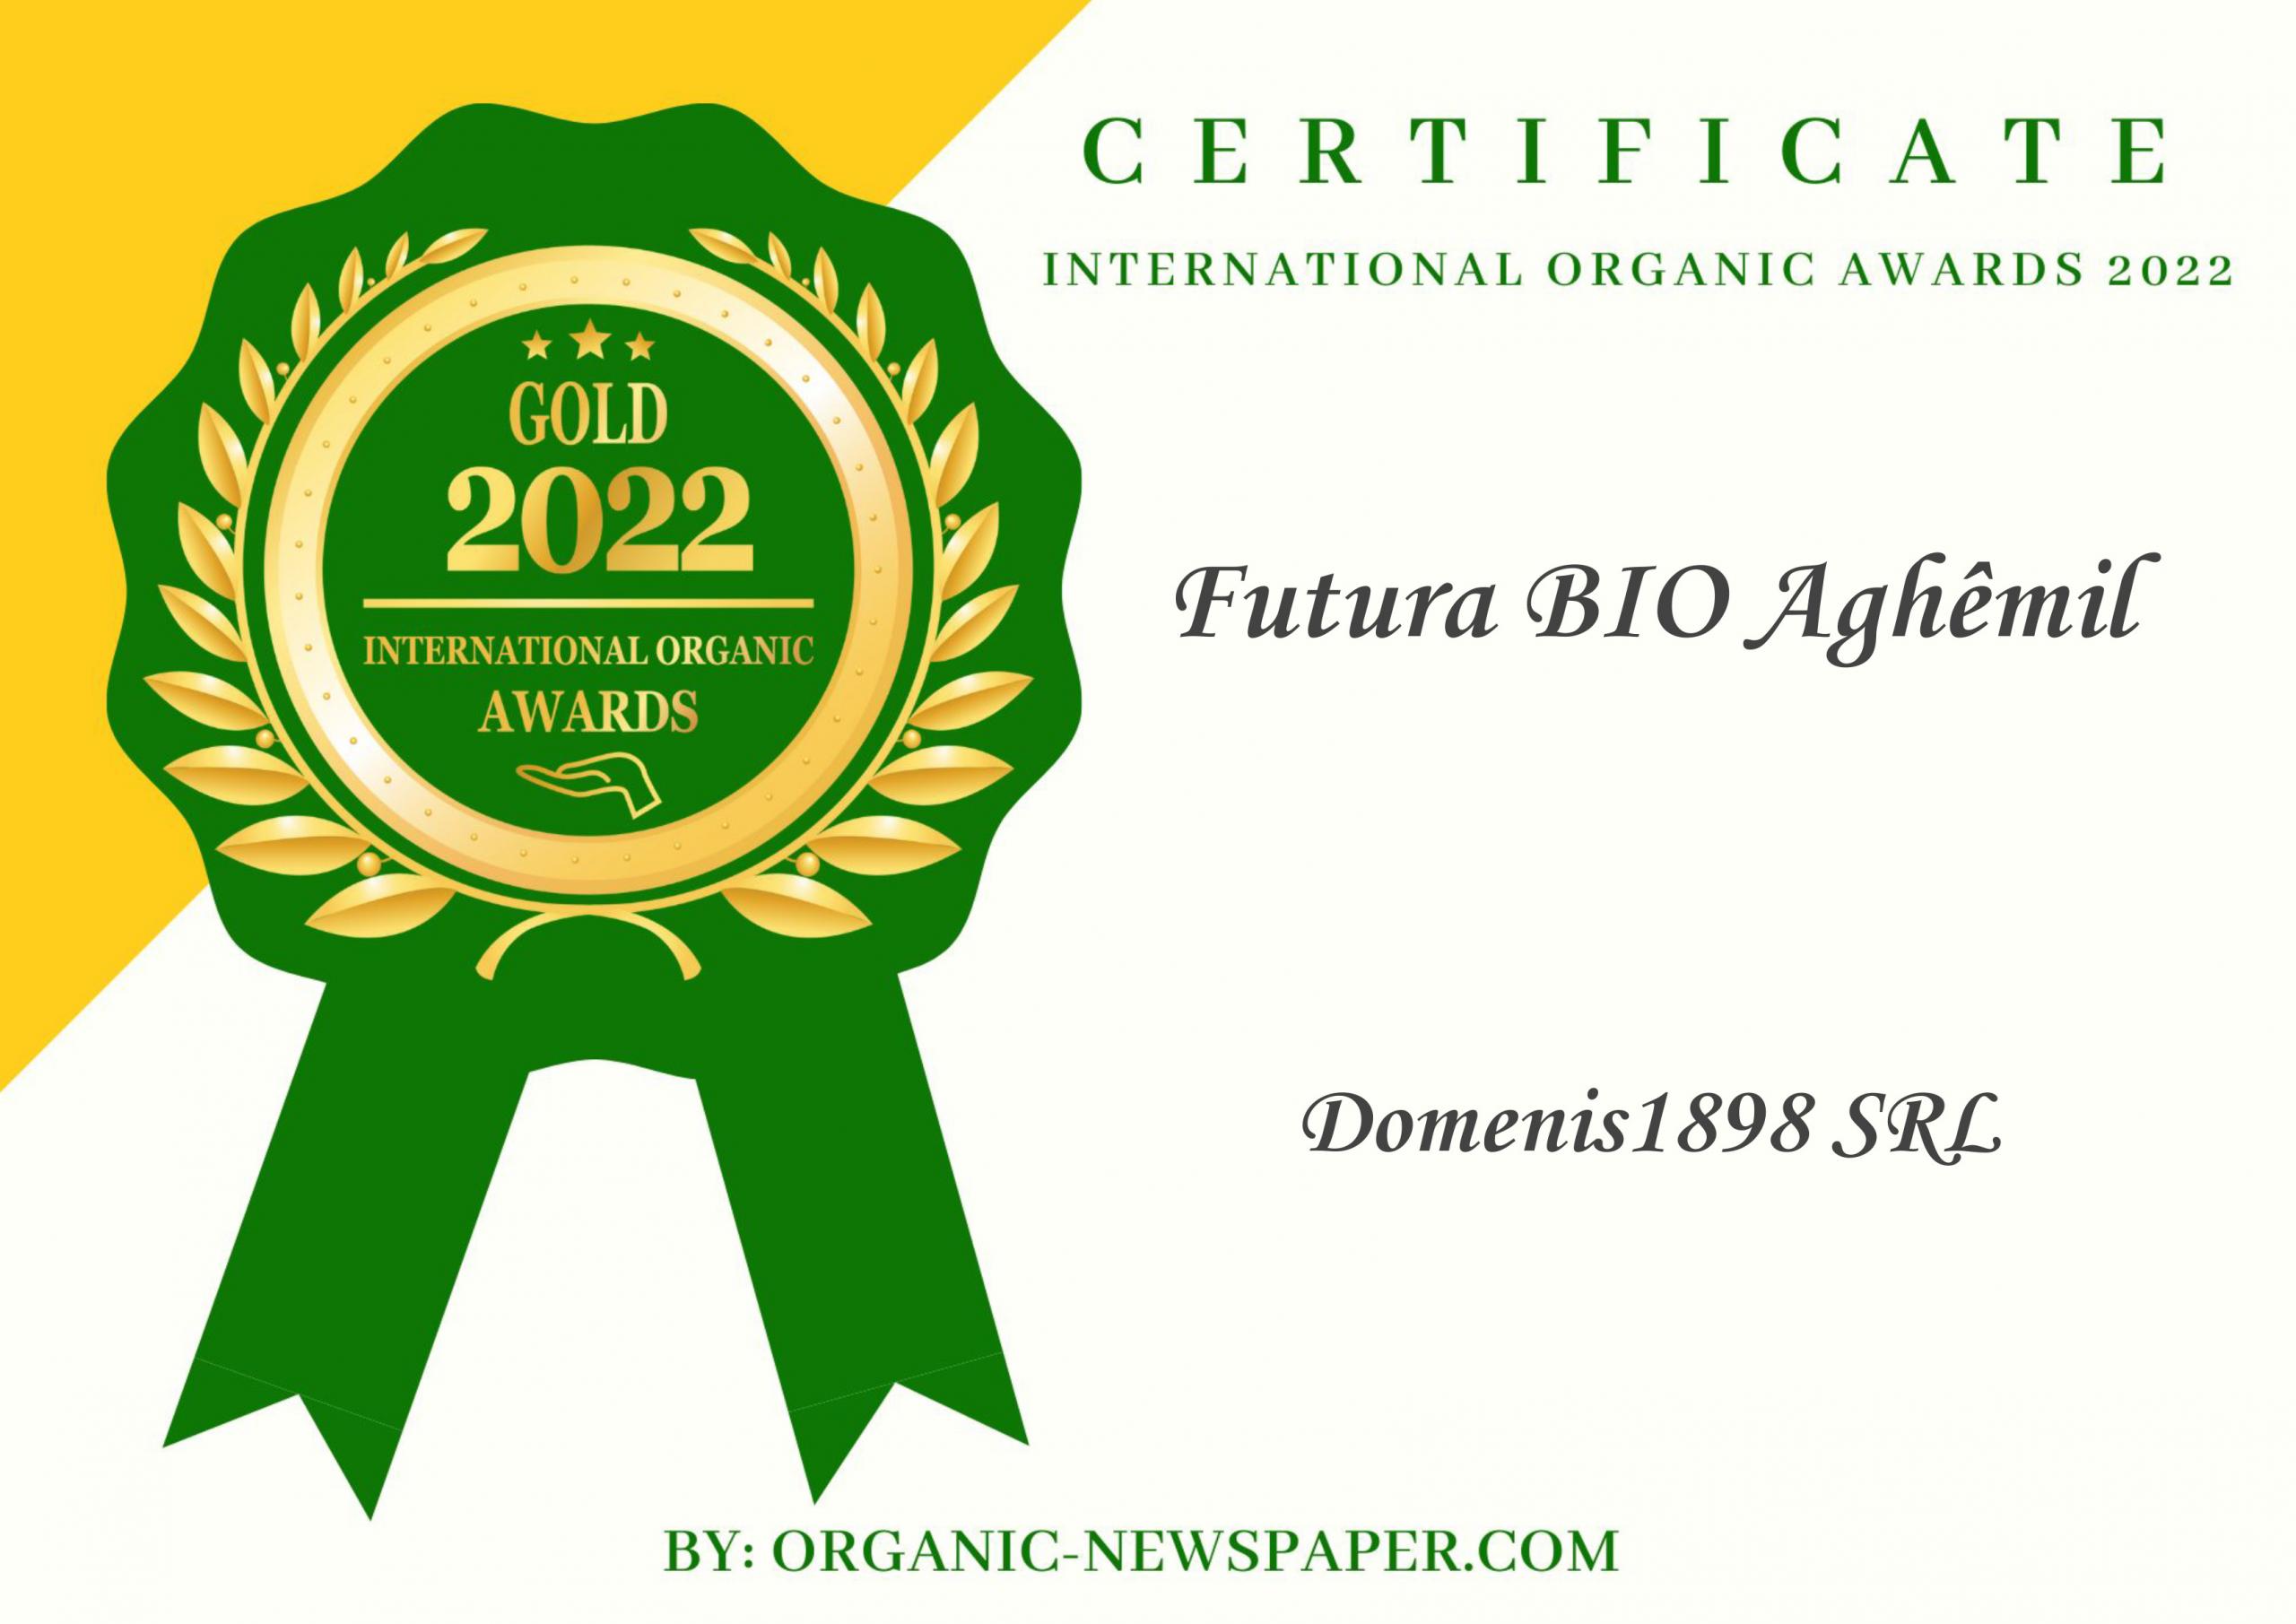 International Organic Awards 2022 – Gold Awards – Futura BIO Aghêmil